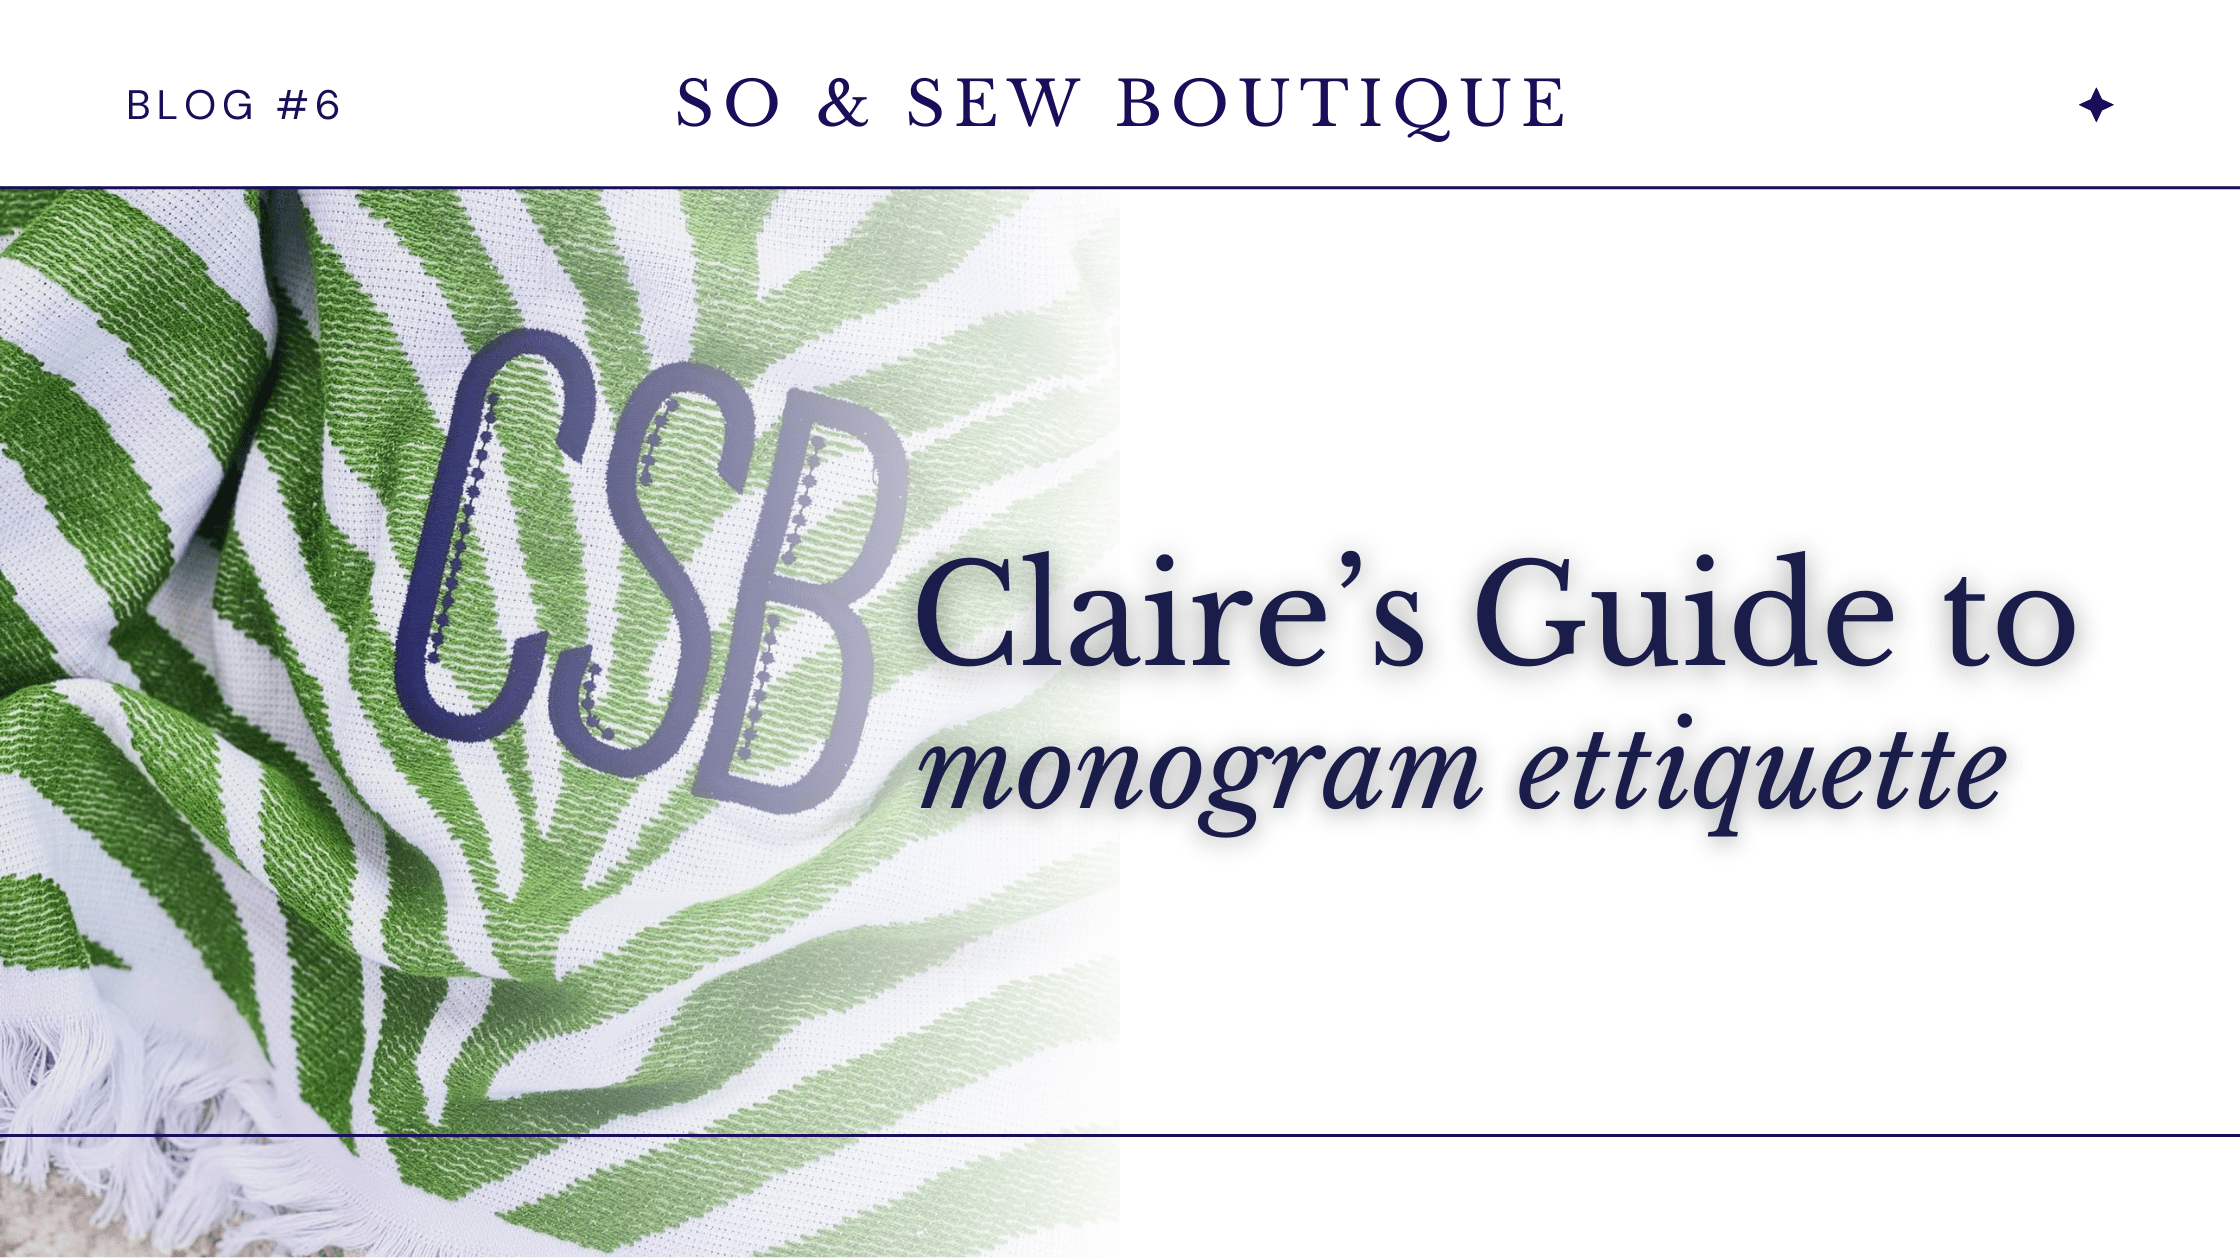 Claire's Monogram Etiquette Guide - So & Sew Boutique